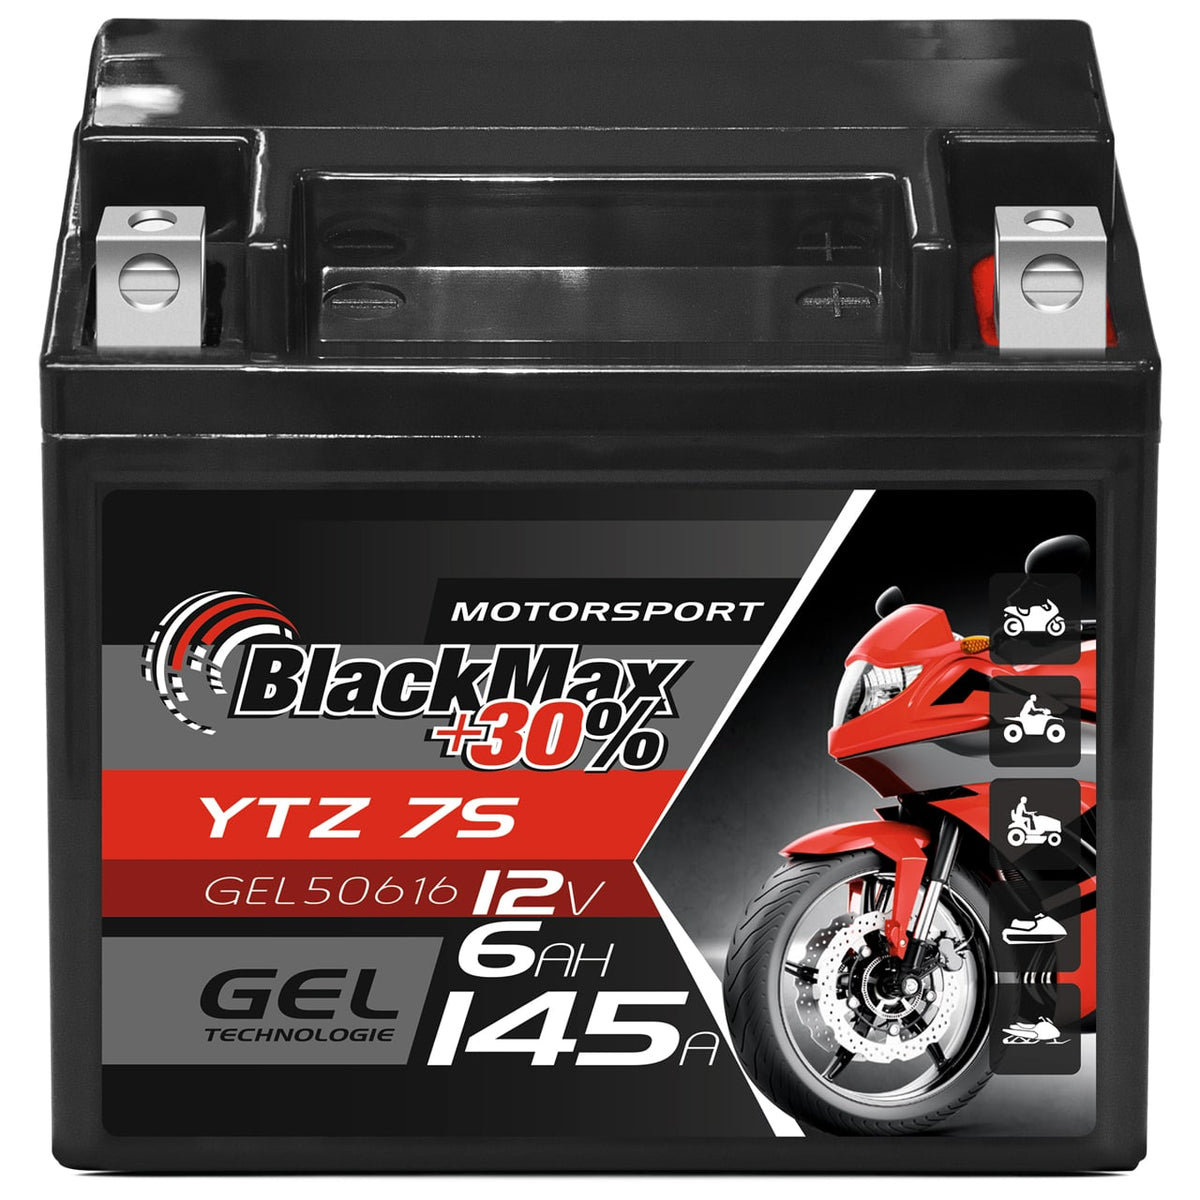 BlackMax +30% Motorsport YTZ7S 50616 GEL 12V 6Ah 145A/EN